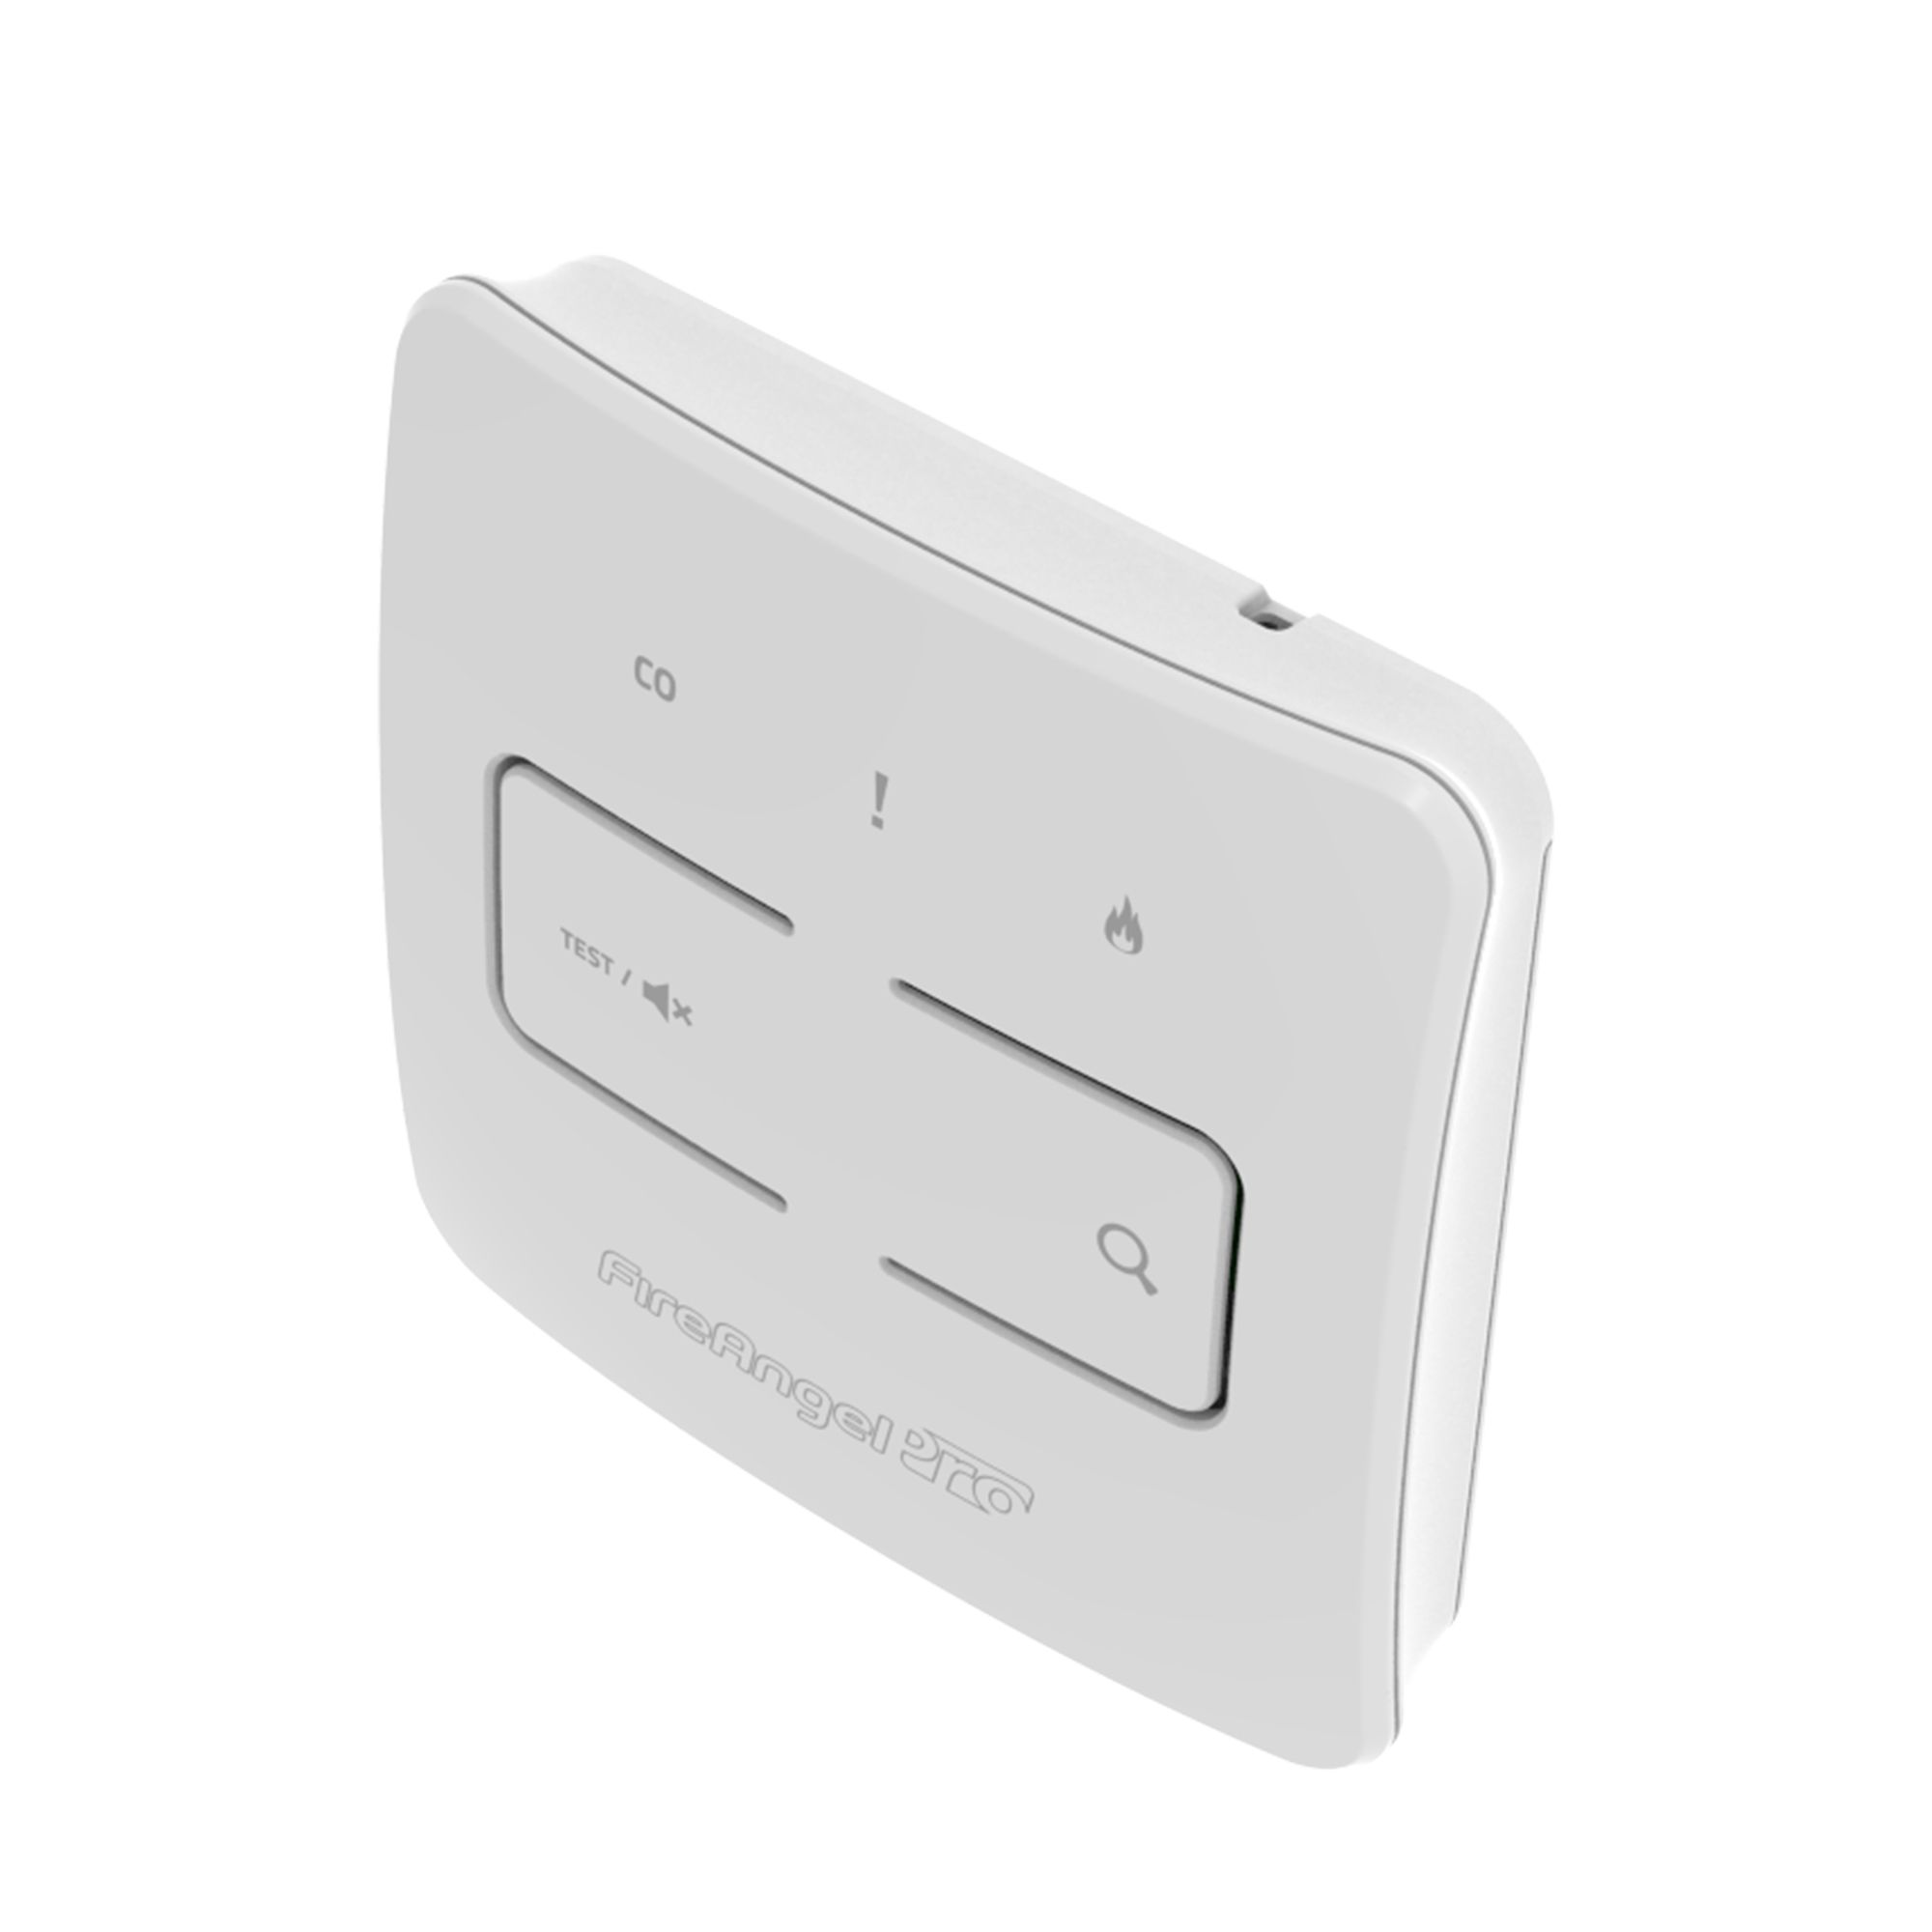 FireAngel Pro Connected Interlinked Smart Room control hub